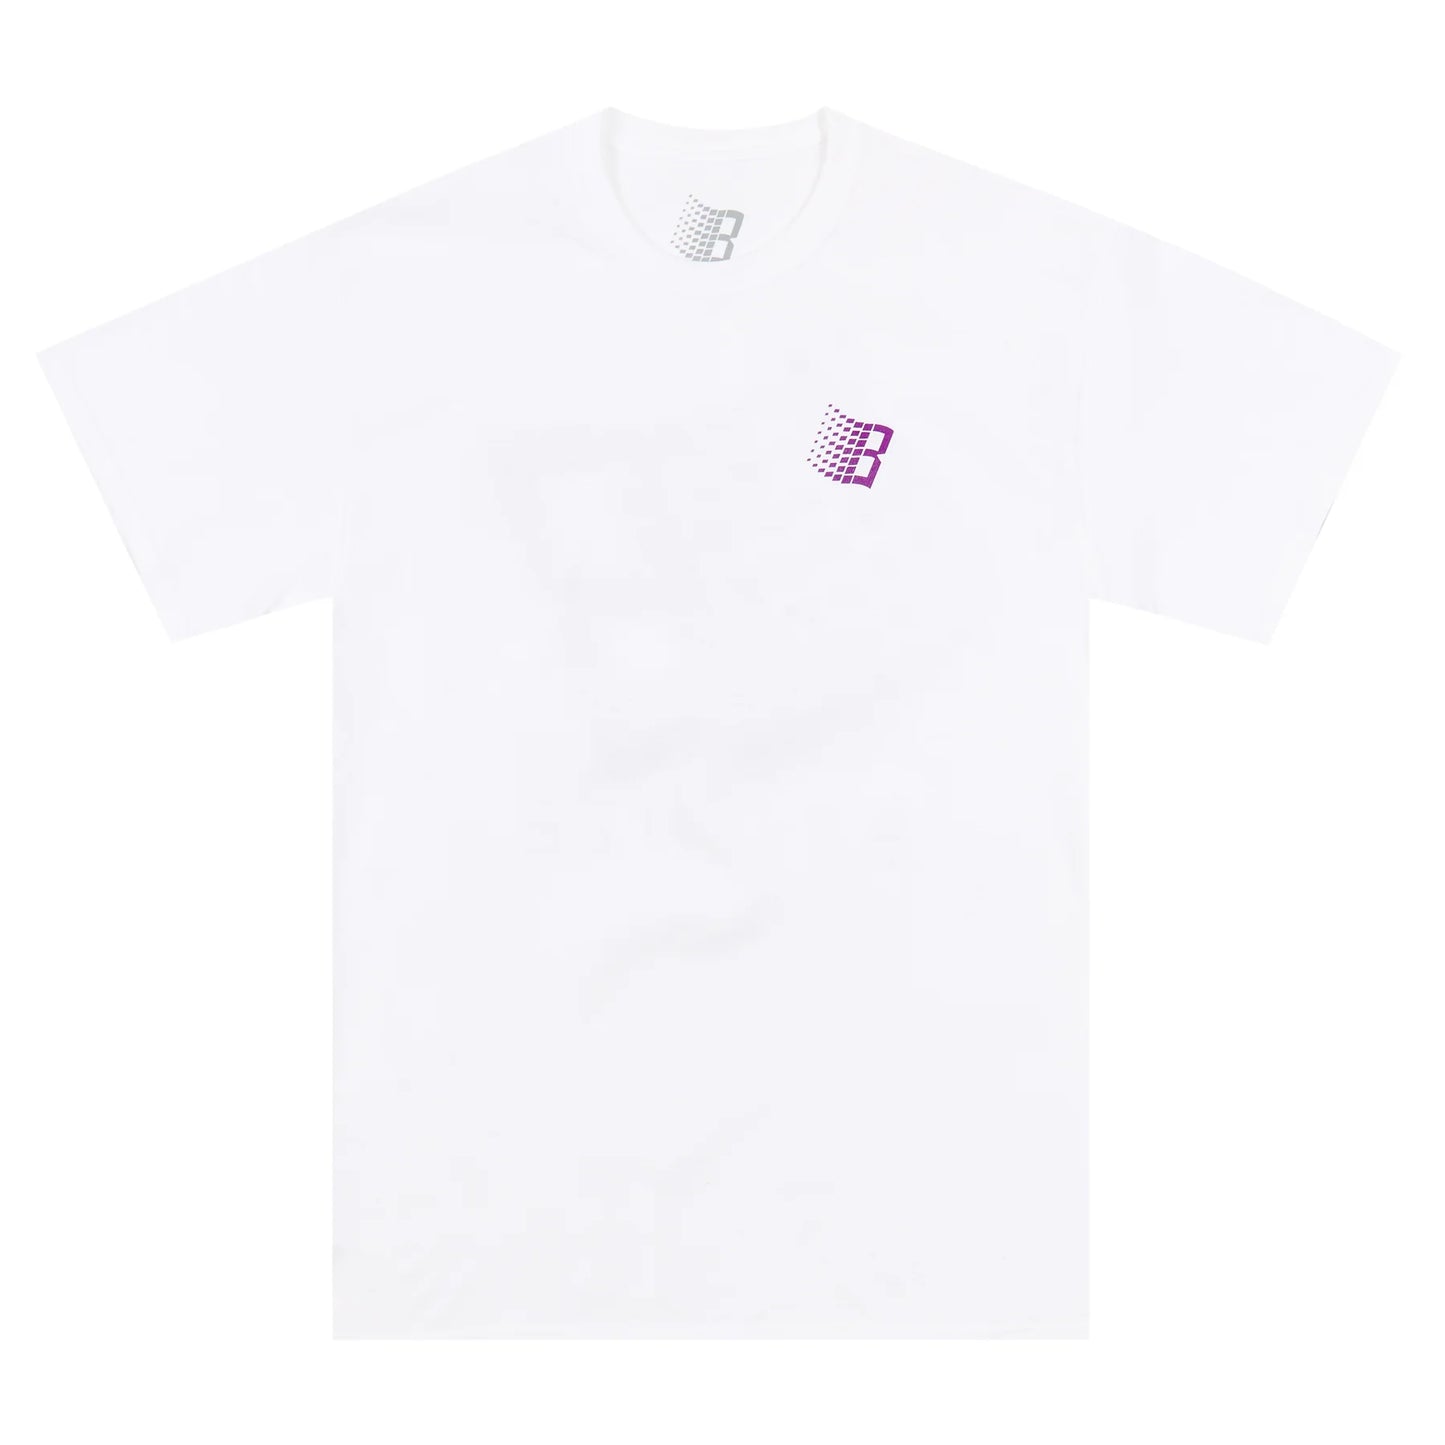 BRONZE56K - Polka Dot Logo Tee White